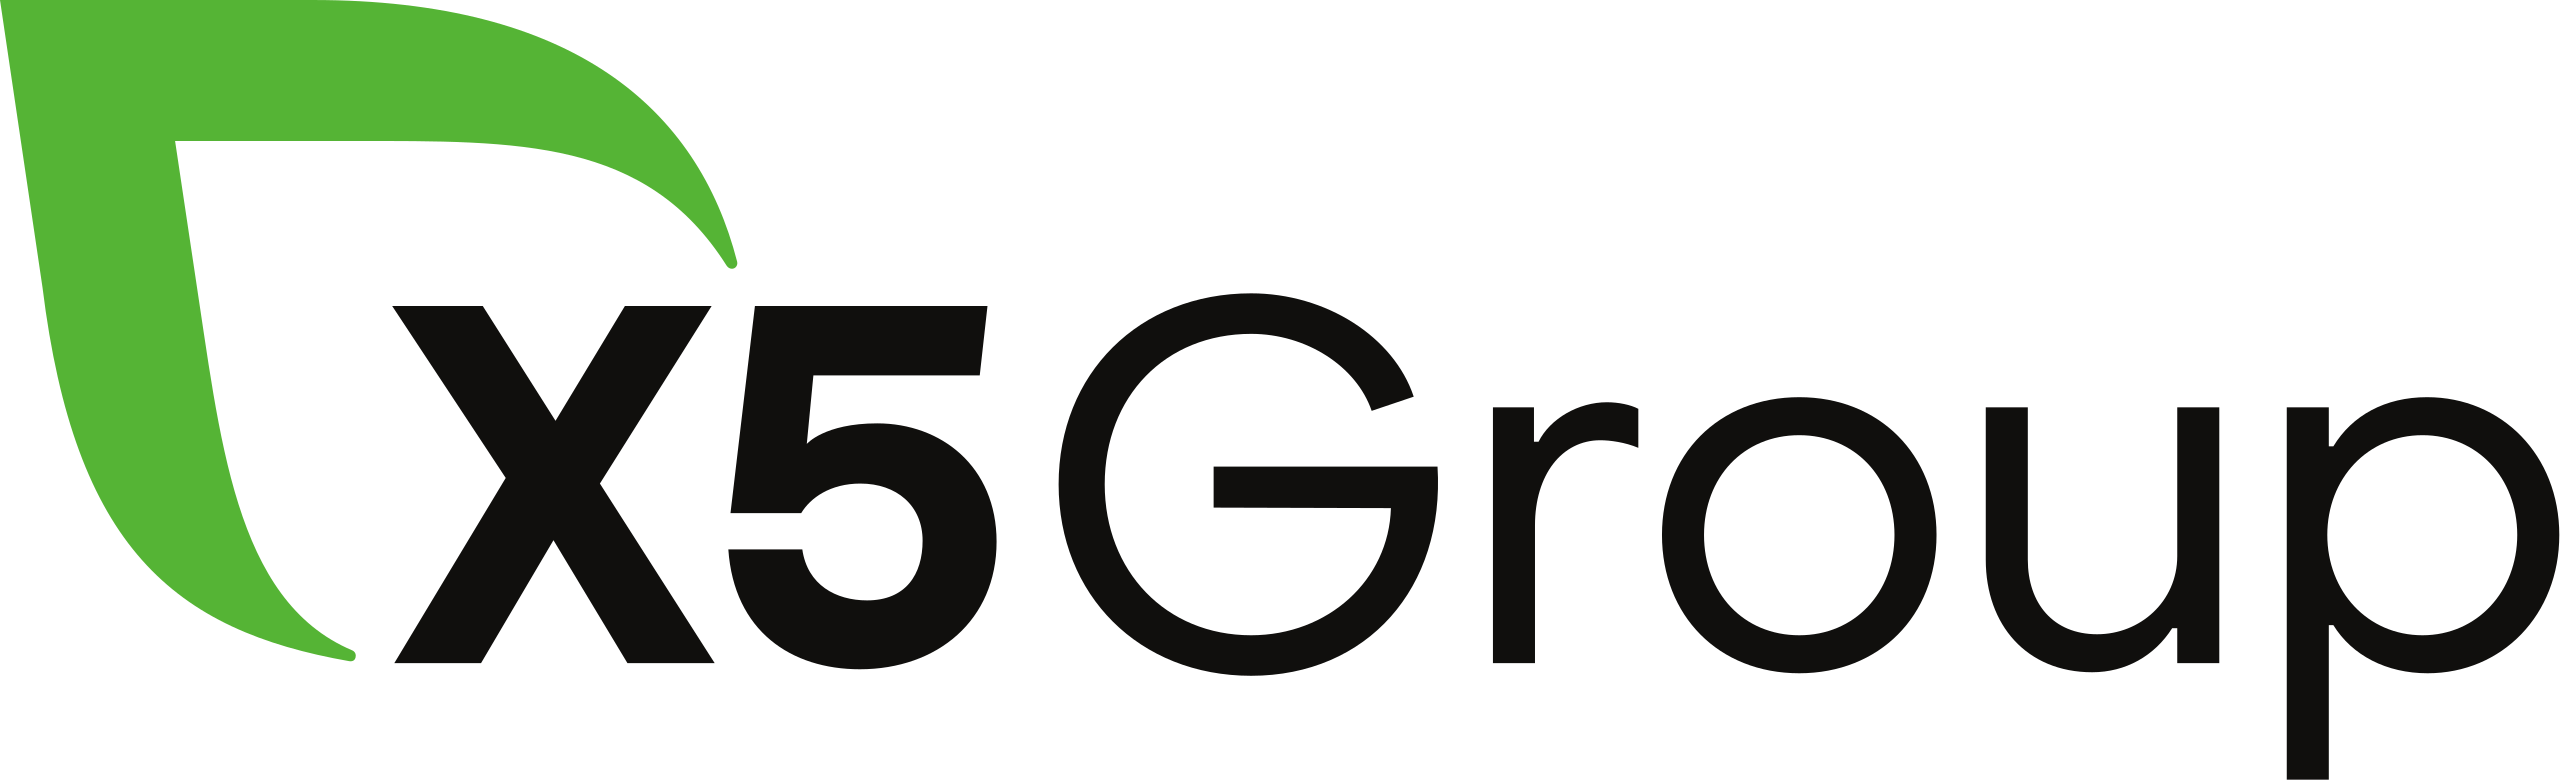 логотип x5group